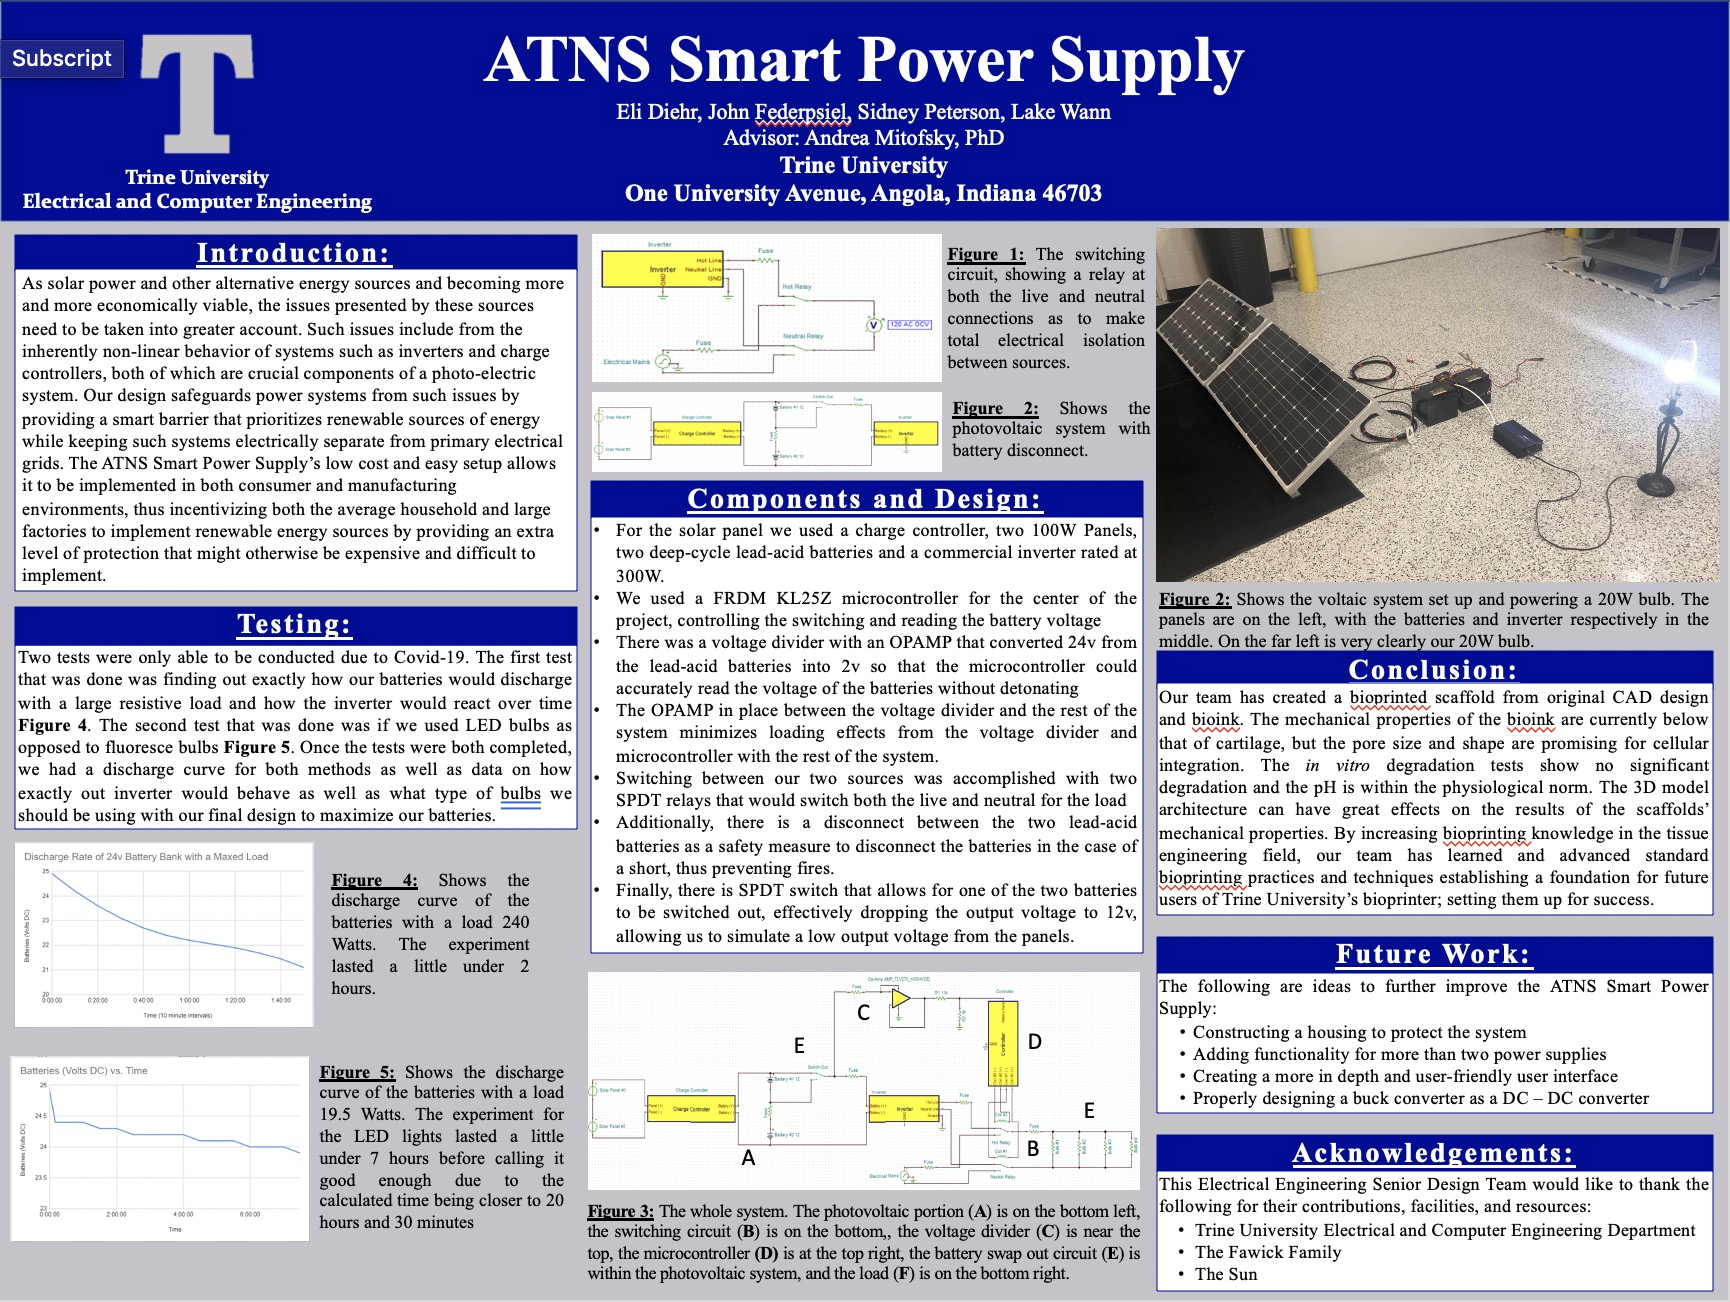 ATNS smart power poster